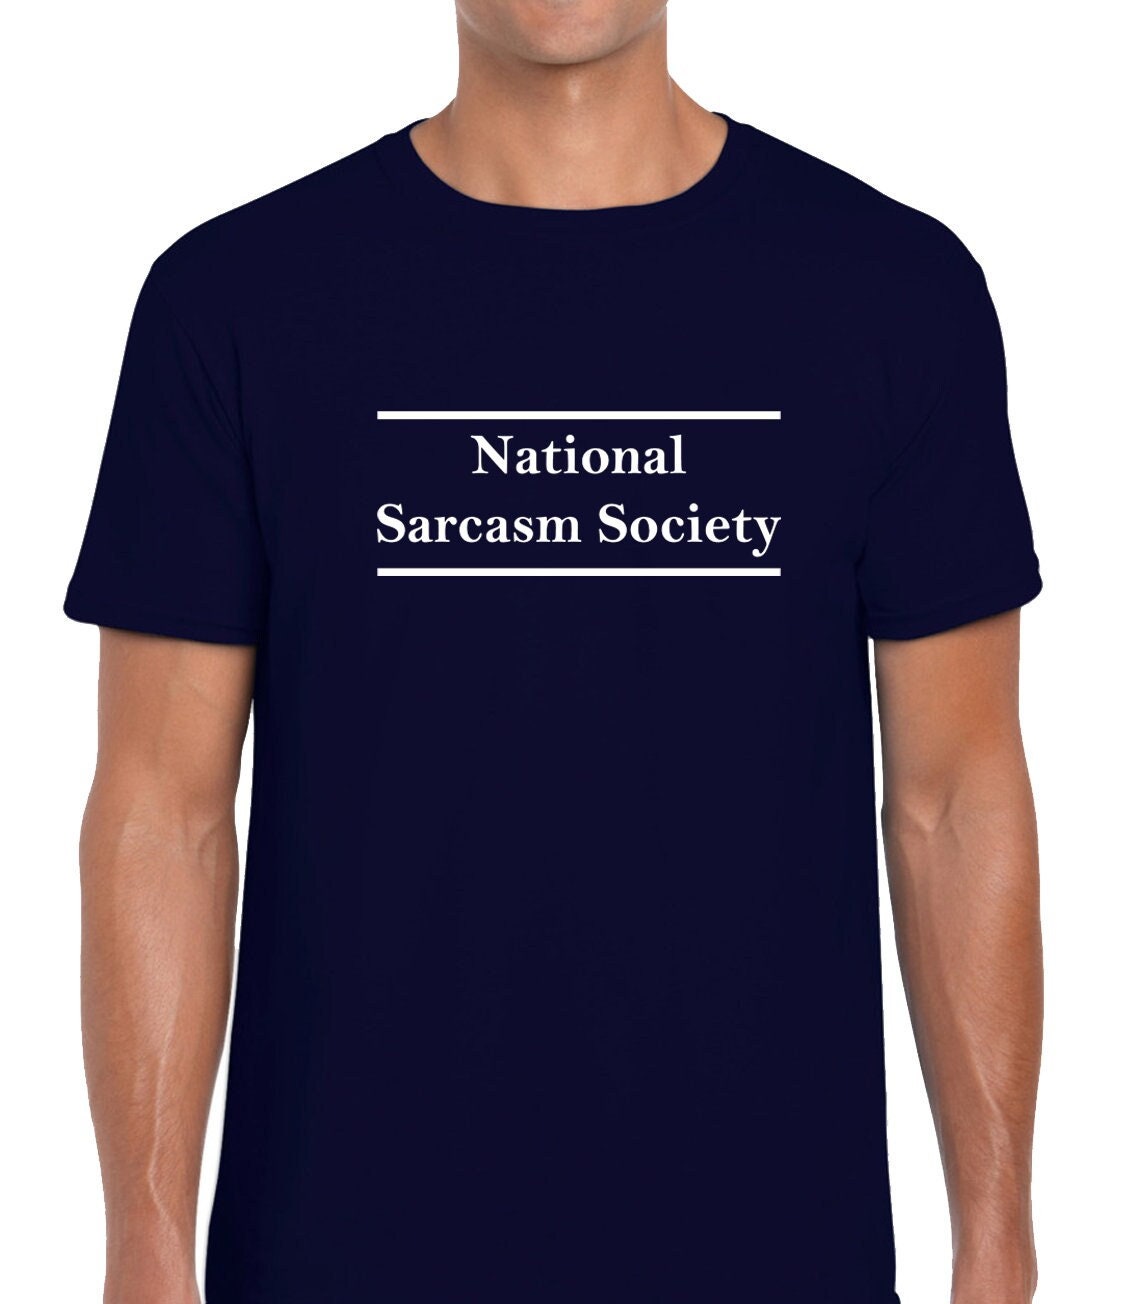 Discover National sarcasm society T-Shirt